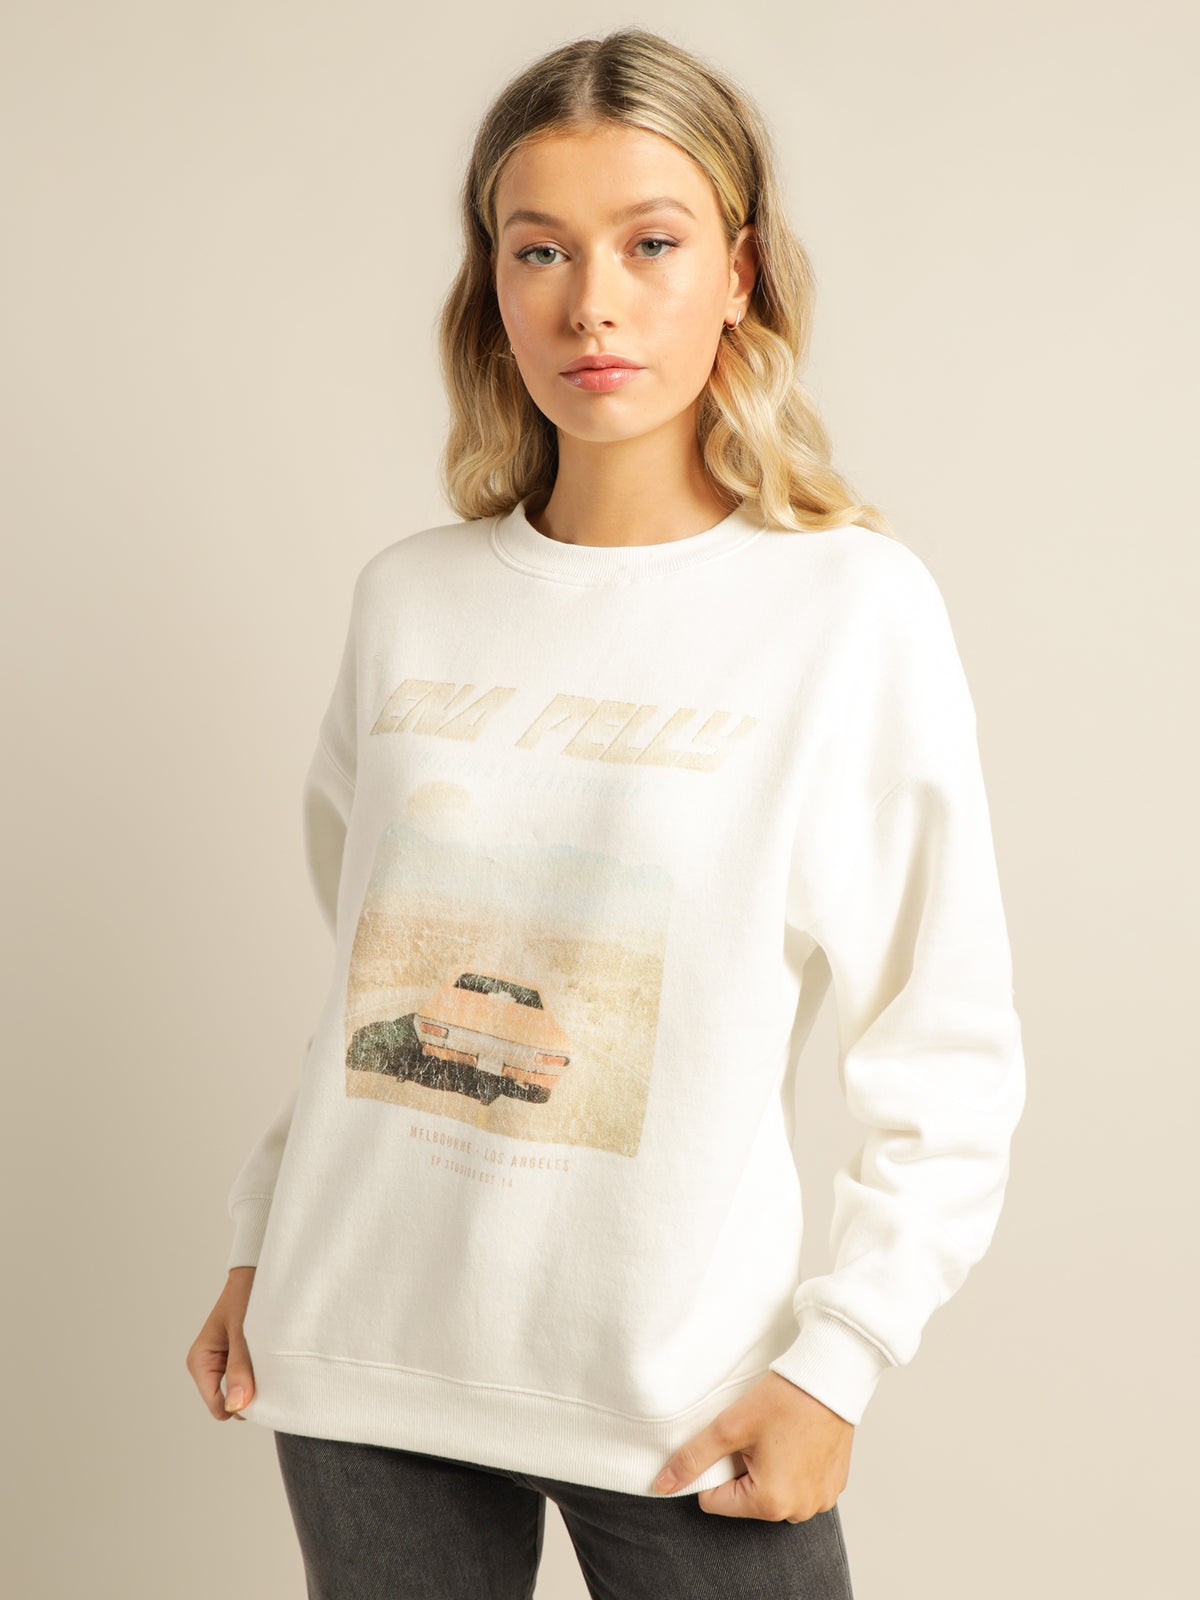 Highway Heartbreak Sweater in Vintage White